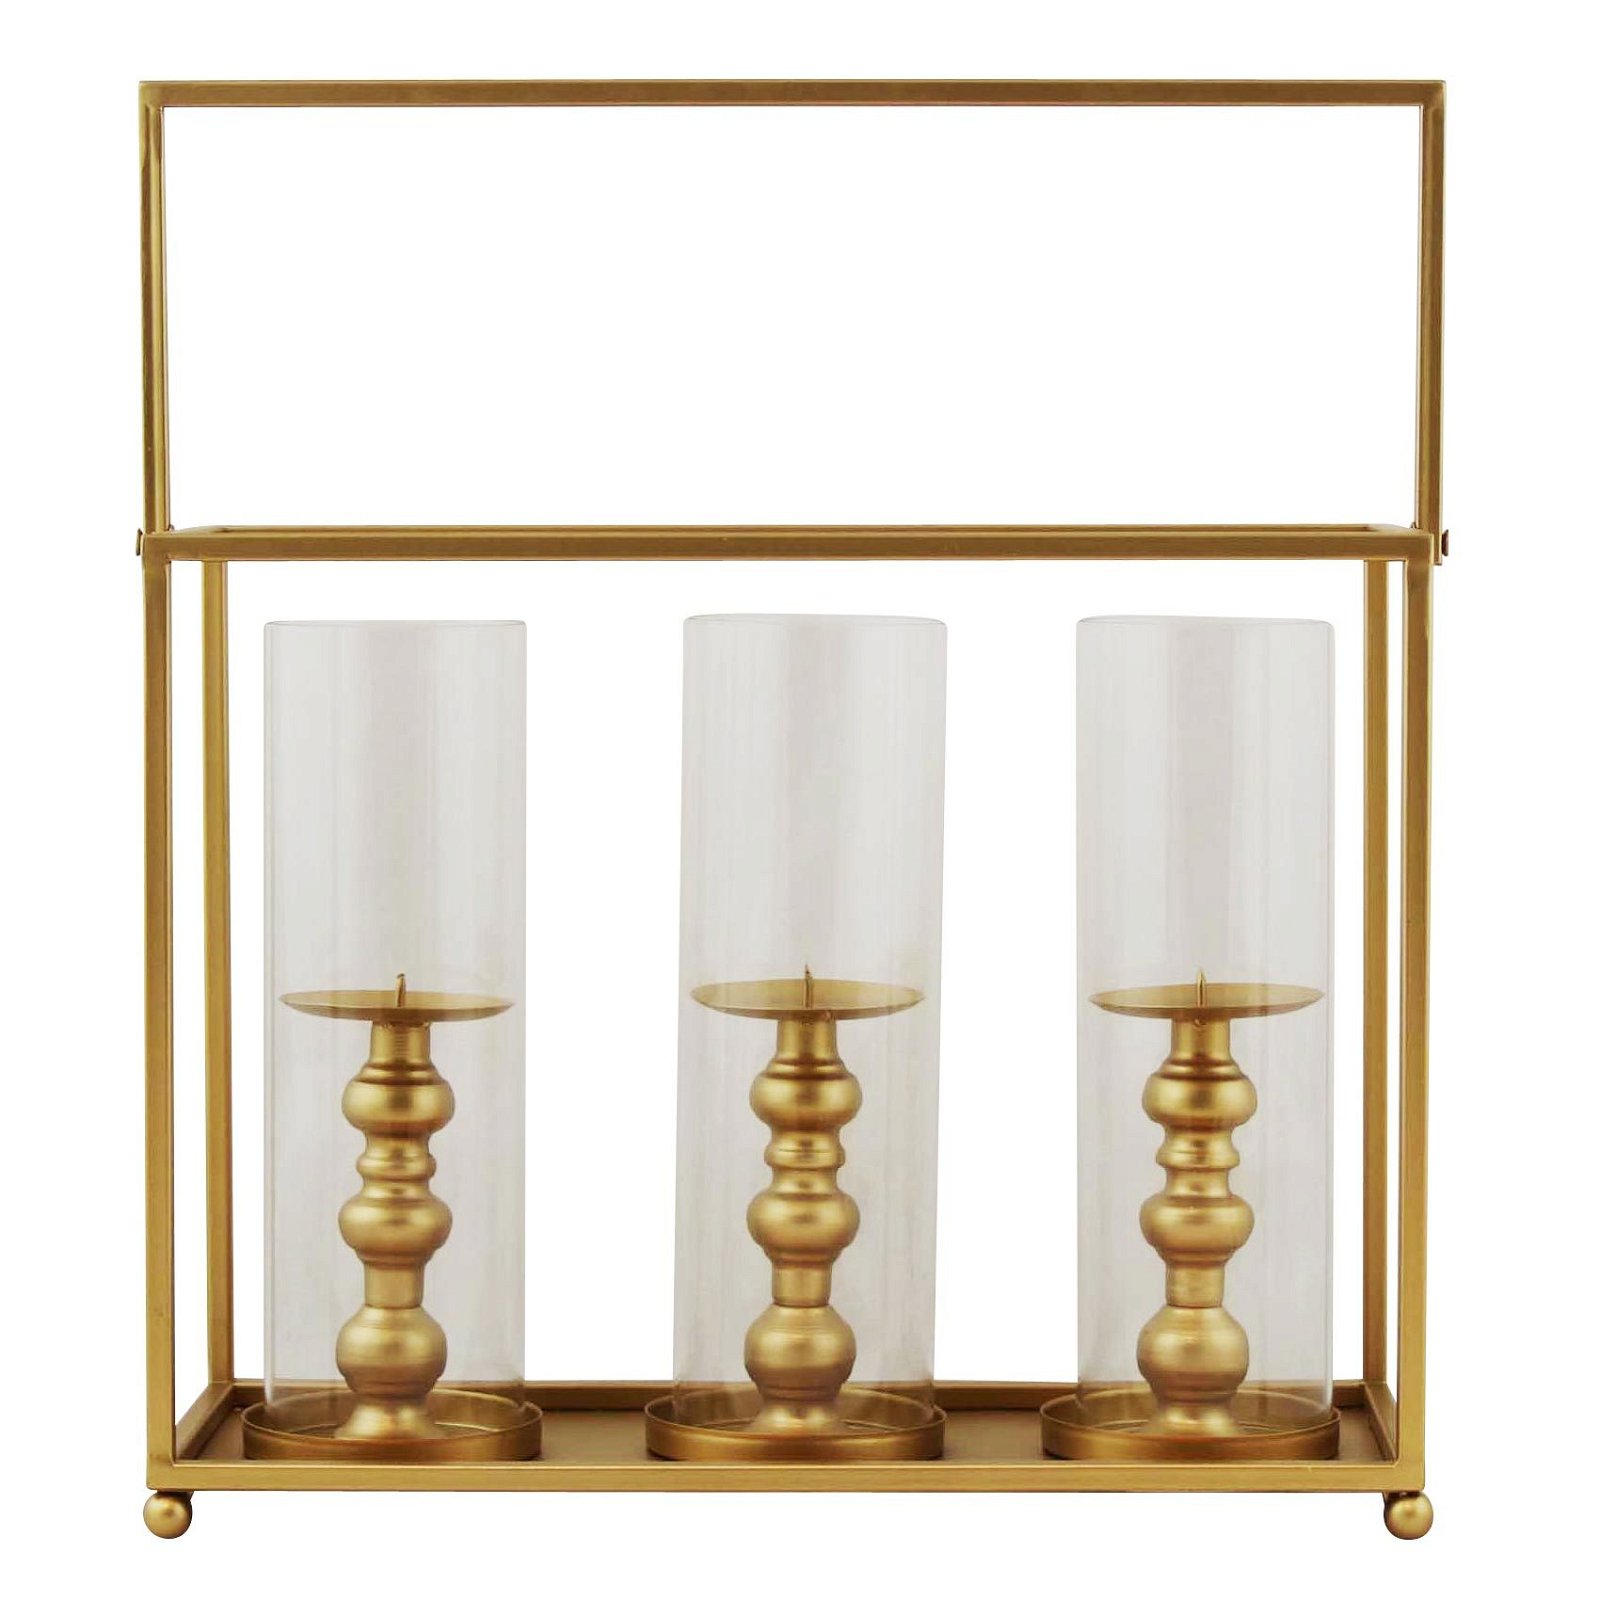 Laterne mit 3 Gläsern, gold, Metall, 39,5 x 16 x 29,5 cm